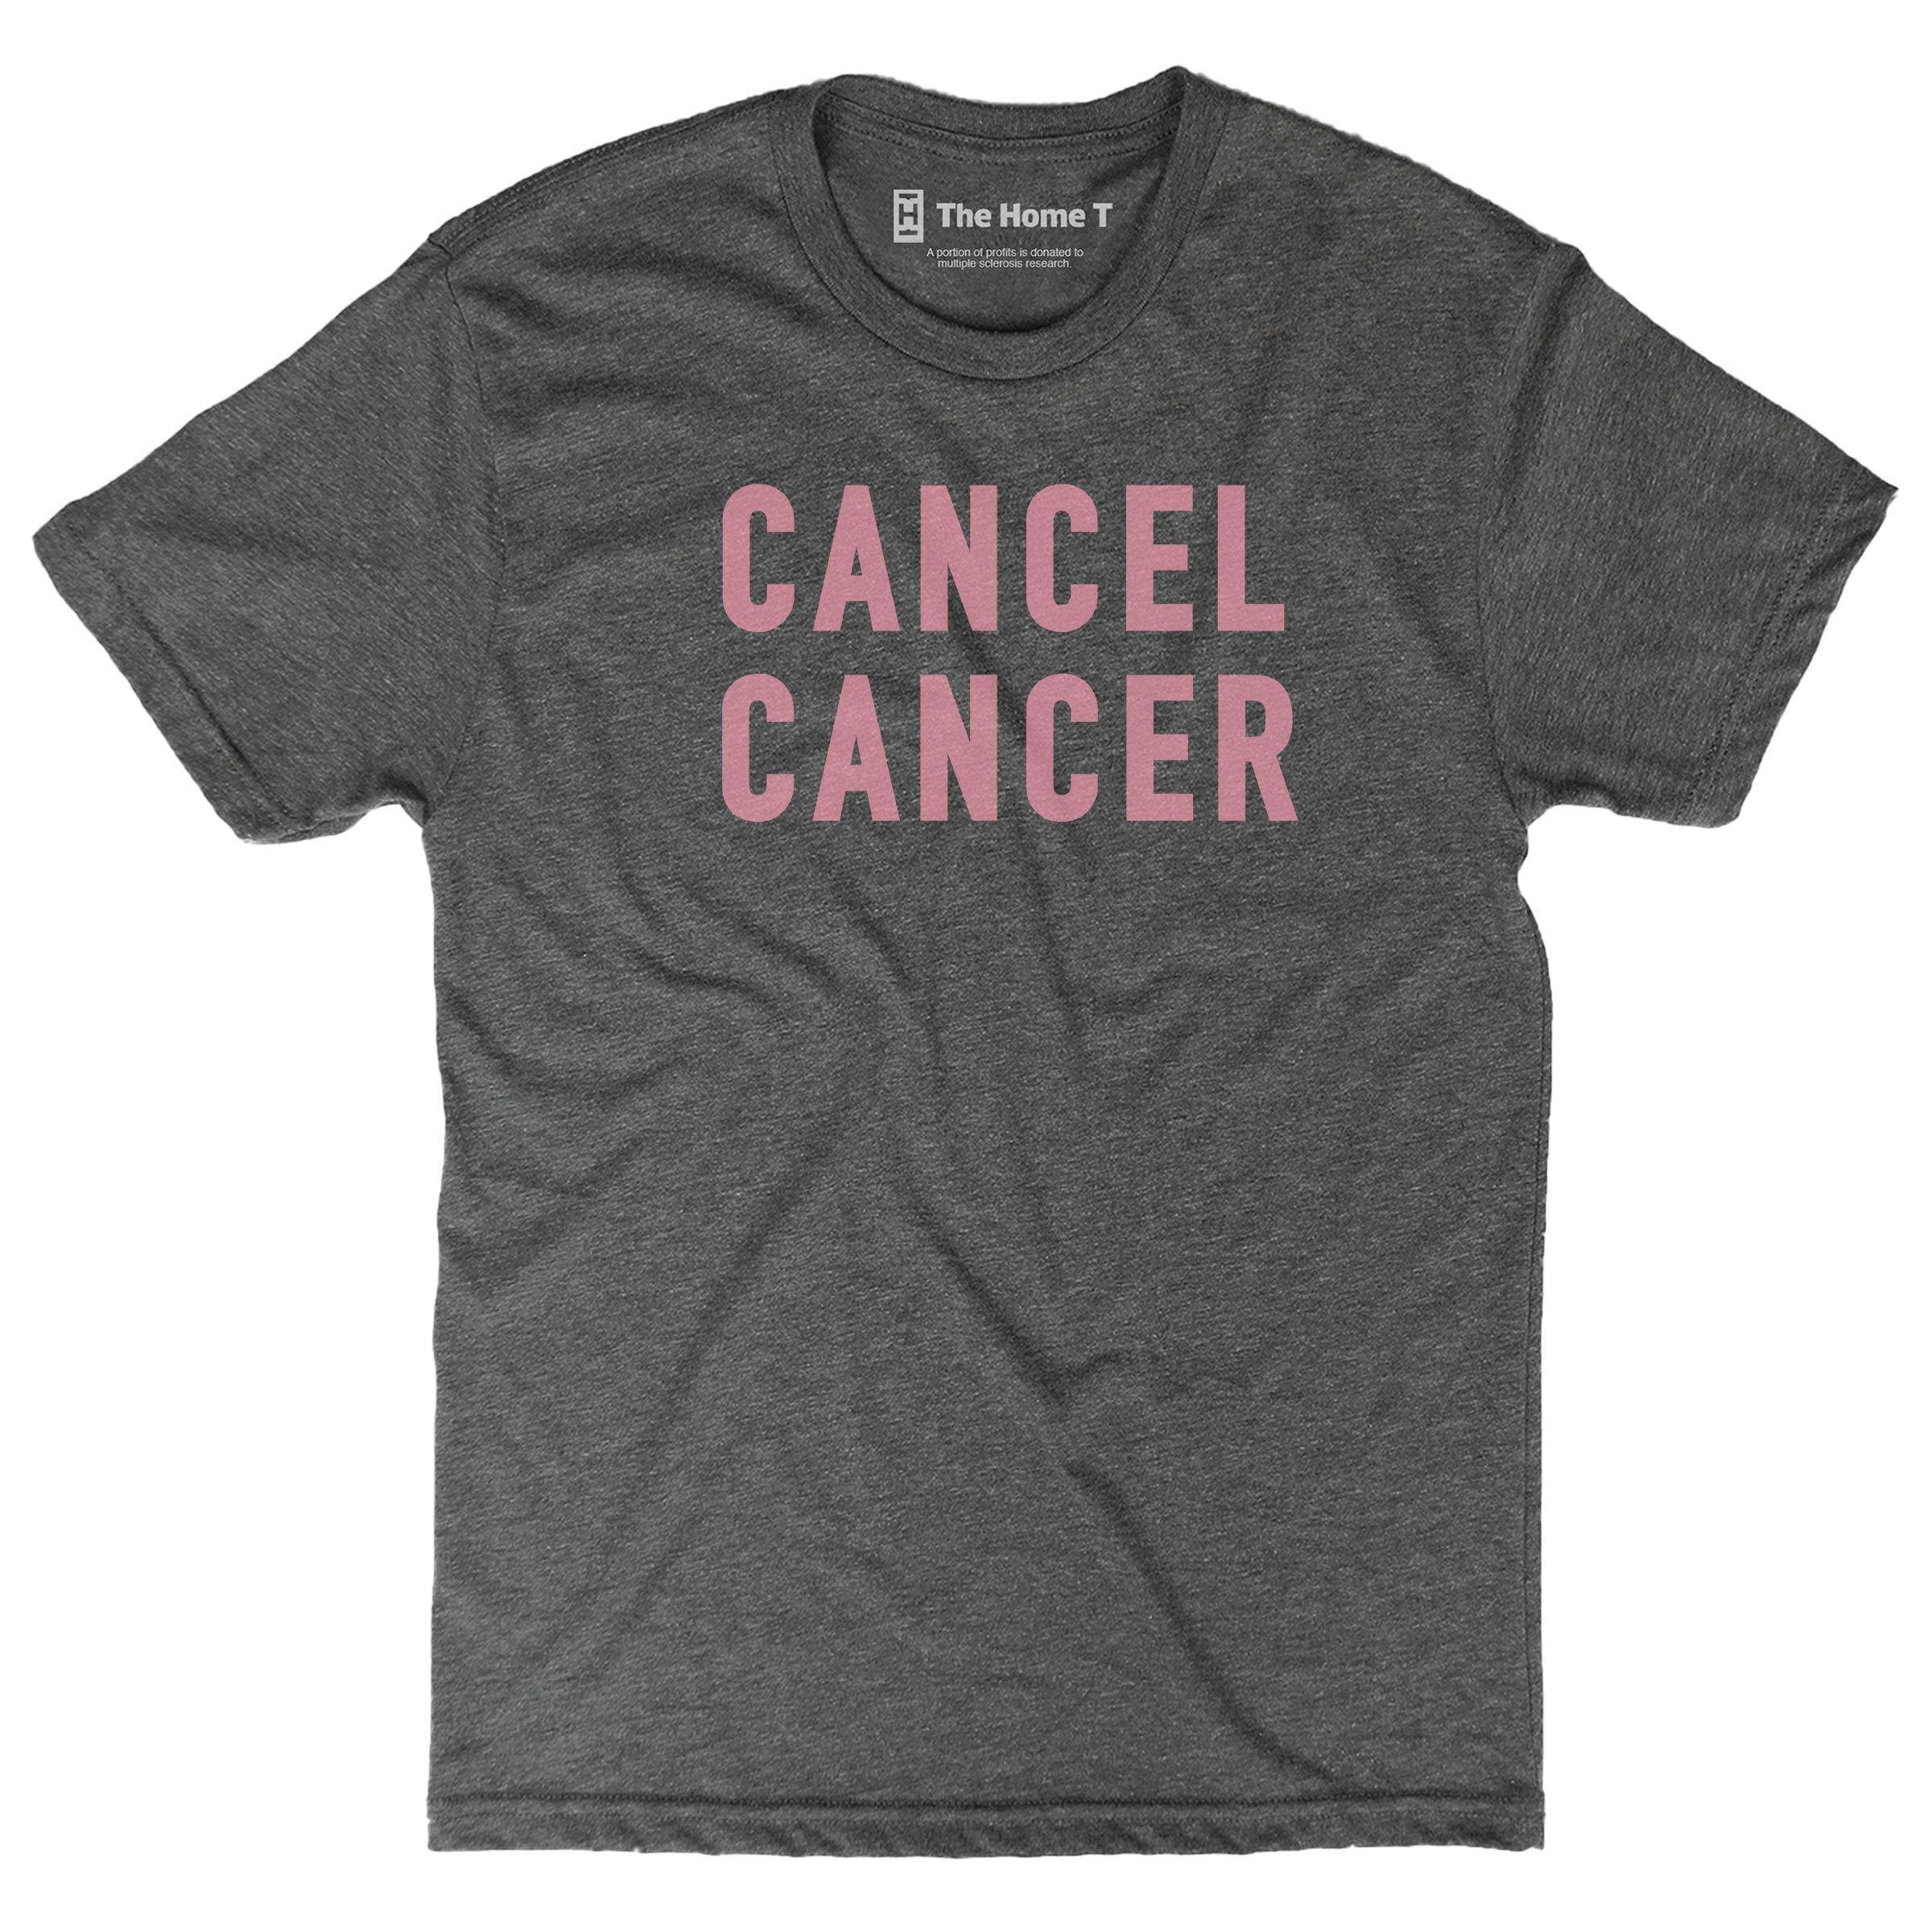 Cancel Cancer